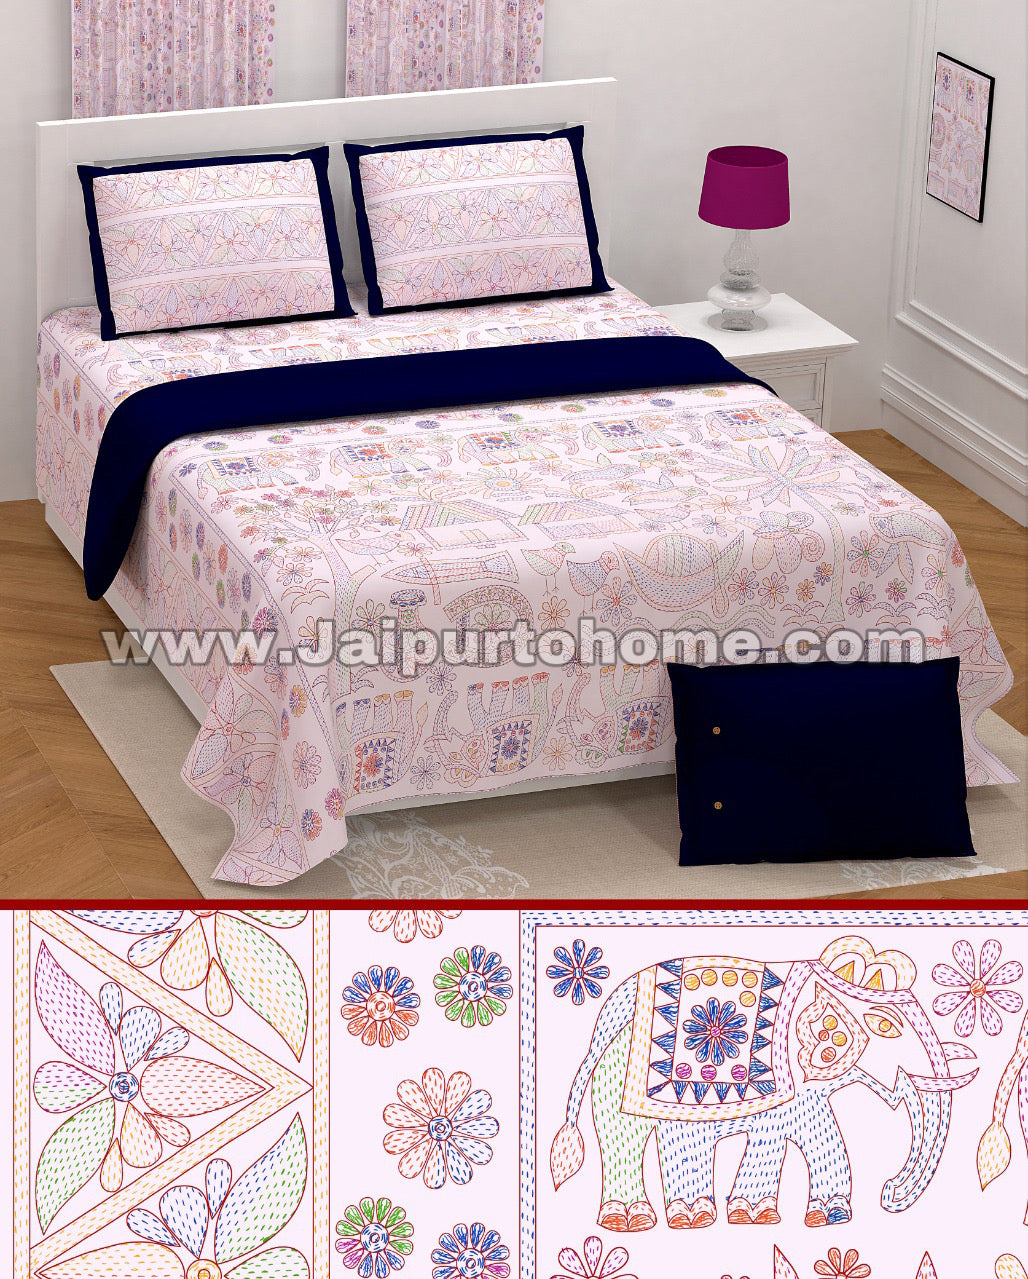 Alllemo Brand Bedsheet 108 x 108 100% Cotton Traditional Jaipuri Print 1 King Bedsheet with 2 Pillow Covers Alllemo Kurta